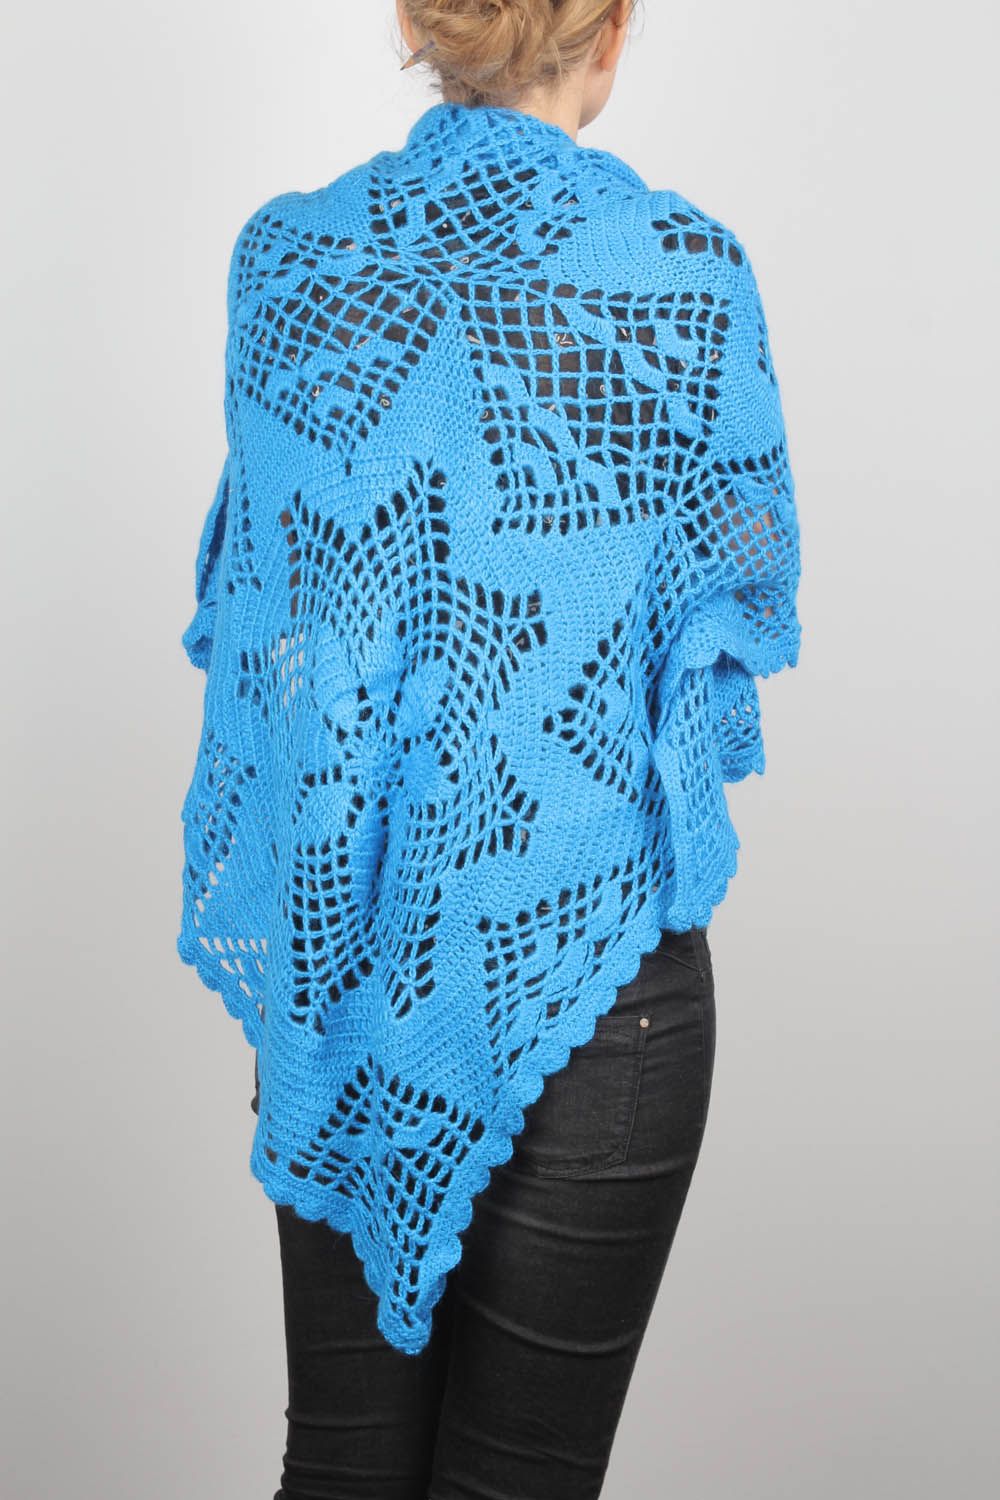 Blue crochet shawl photo 4